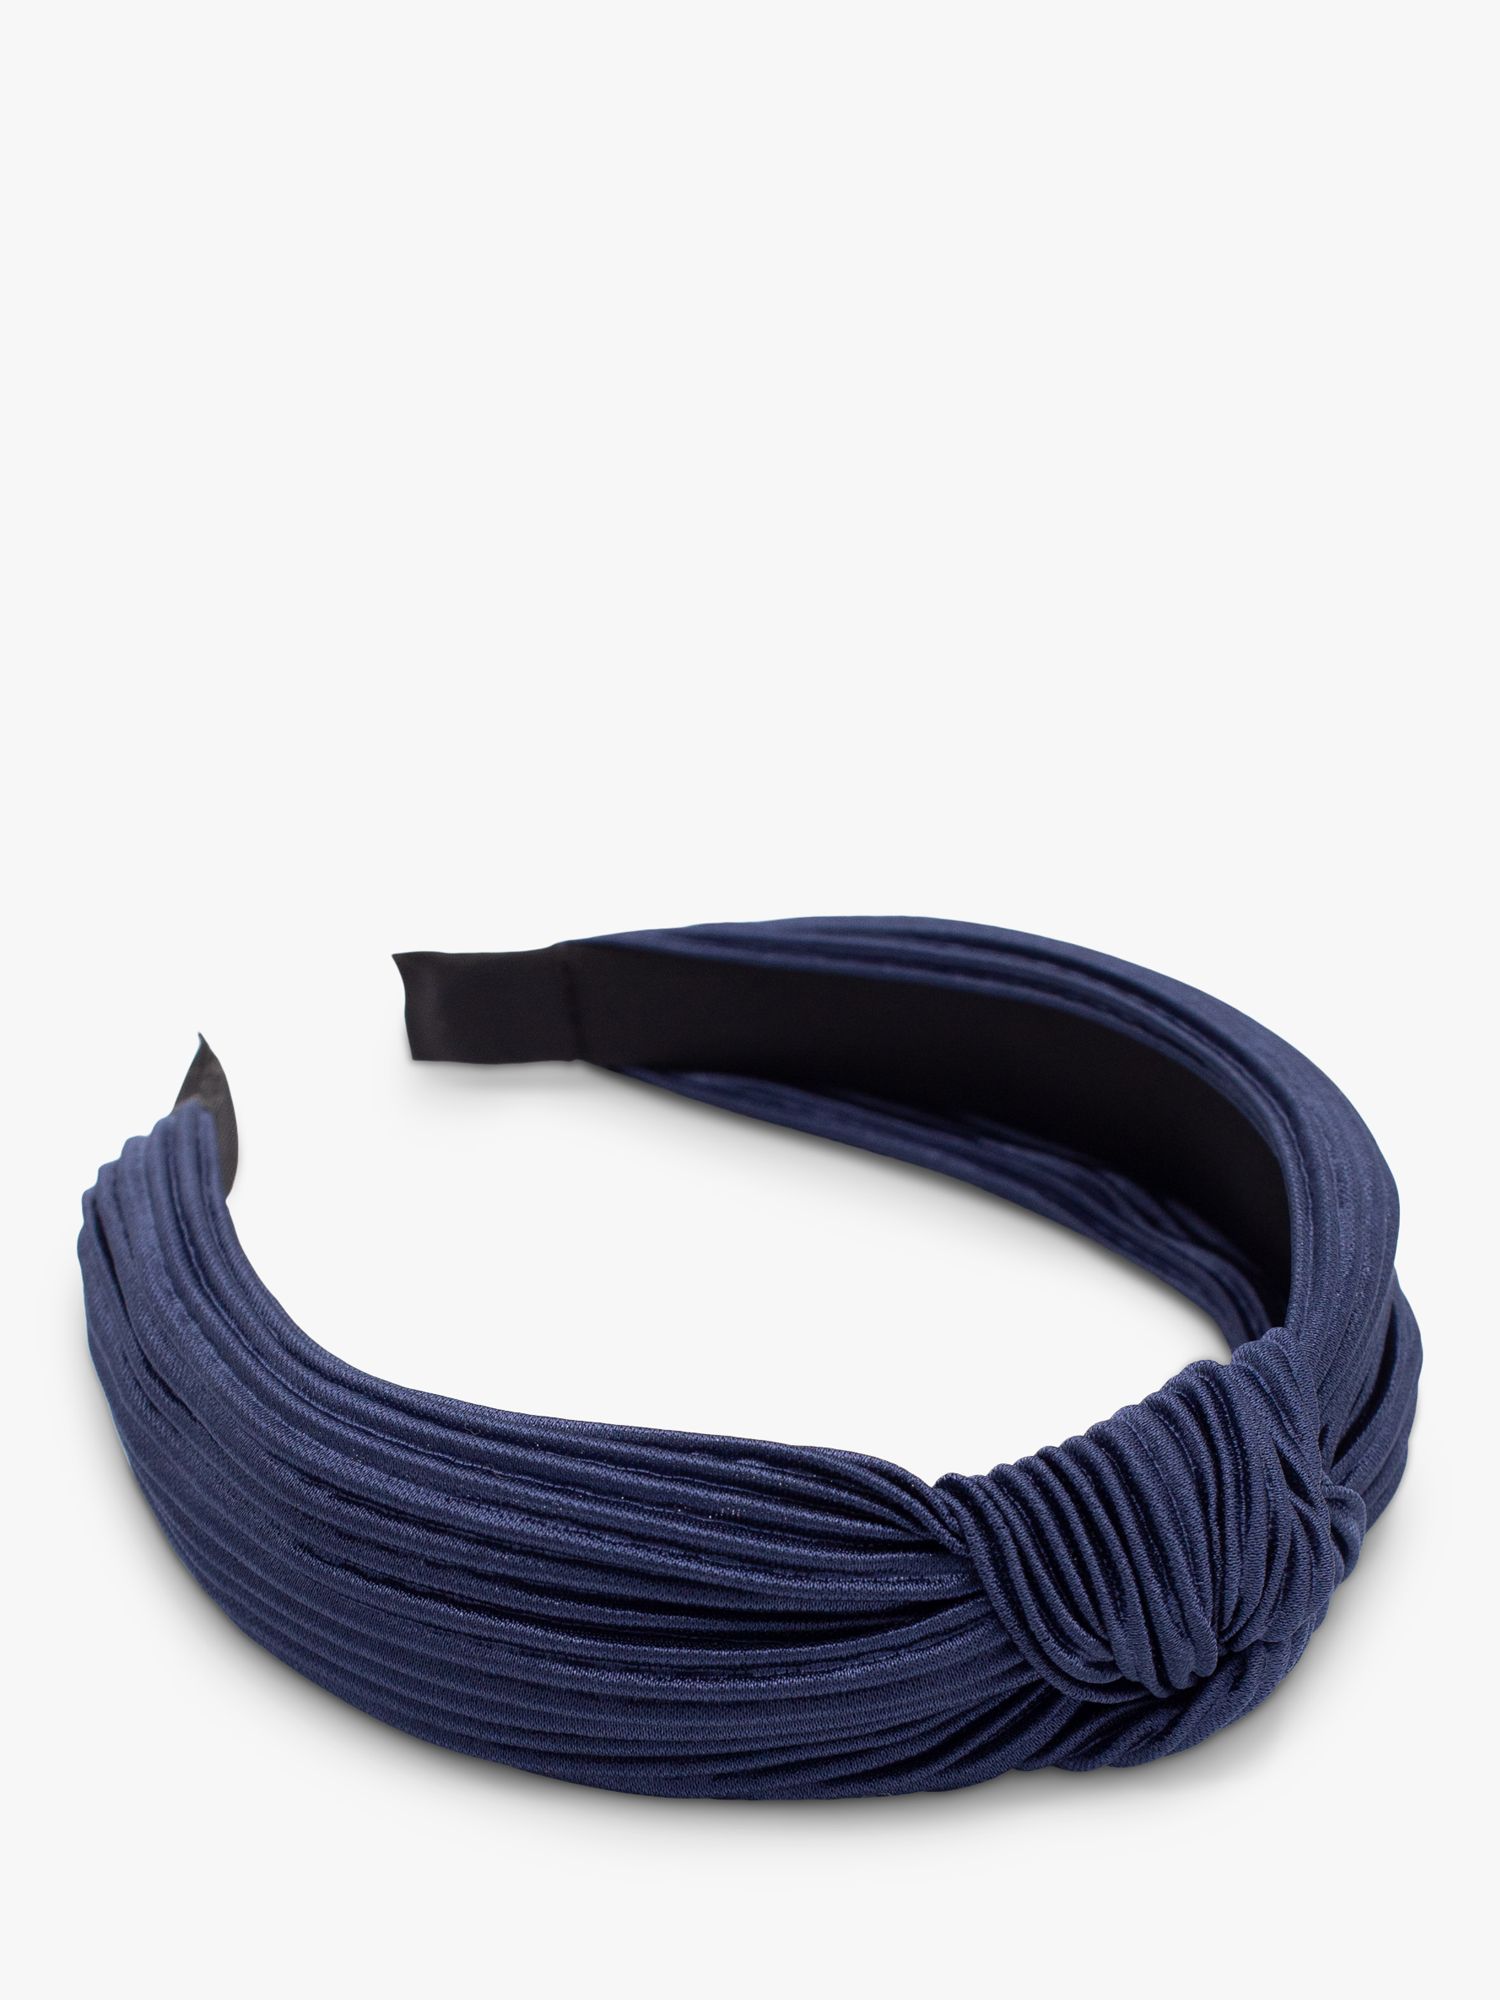 Bloom & Bay Lantic Knot Detail Pleated Headband, Navy, One Size